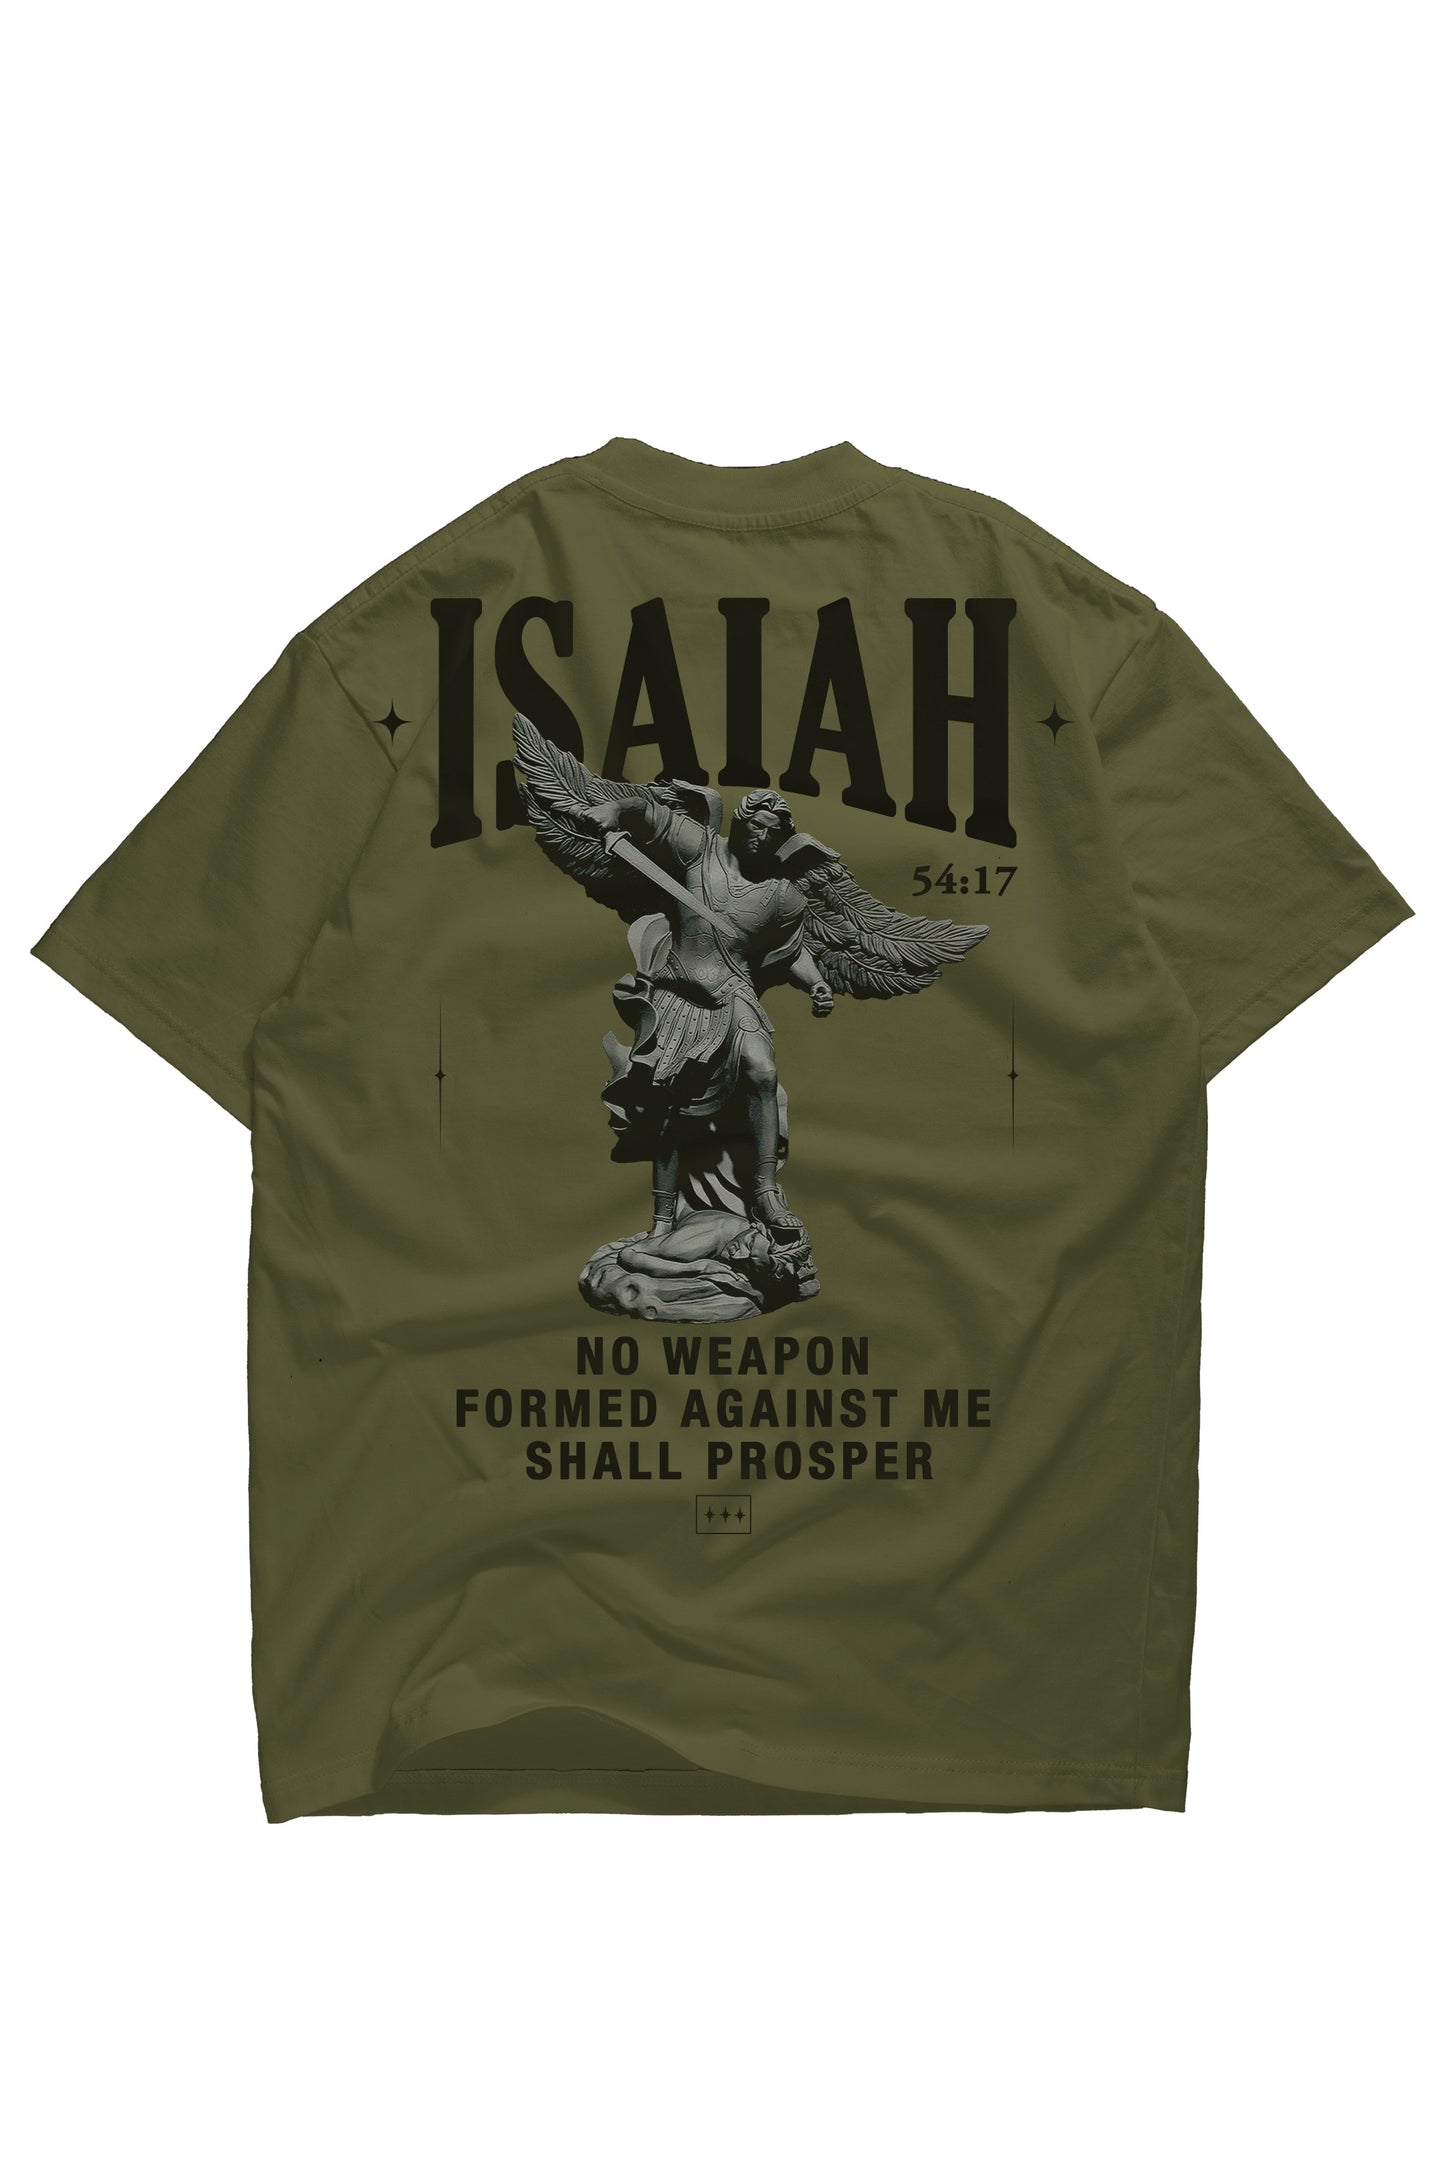 Isaiah 57:17 Heavyweight T-shirt